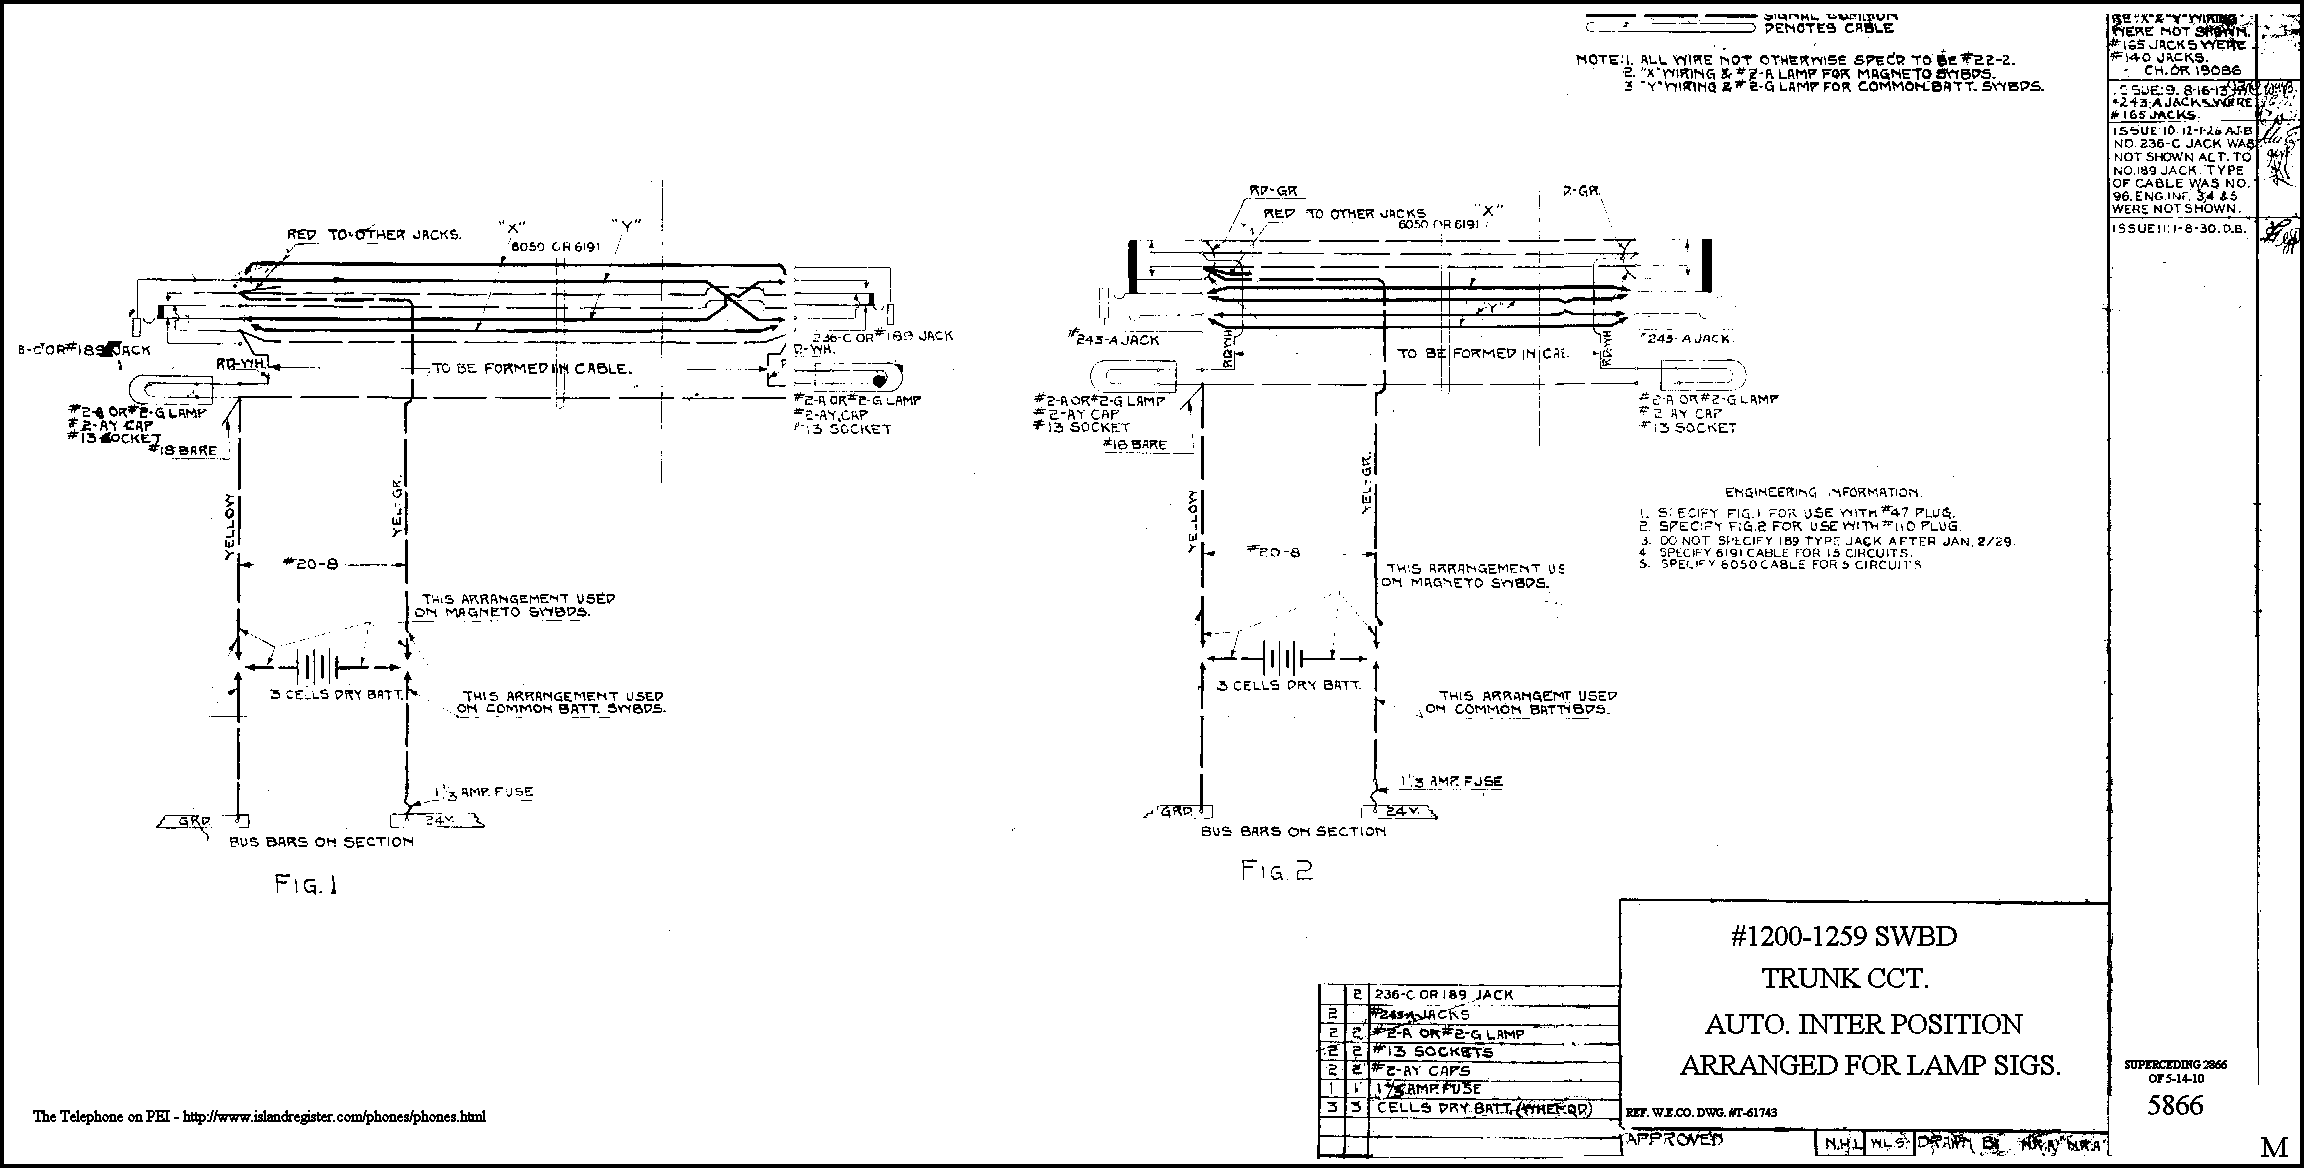 stromberg carlson 896 telephone wiring diagram